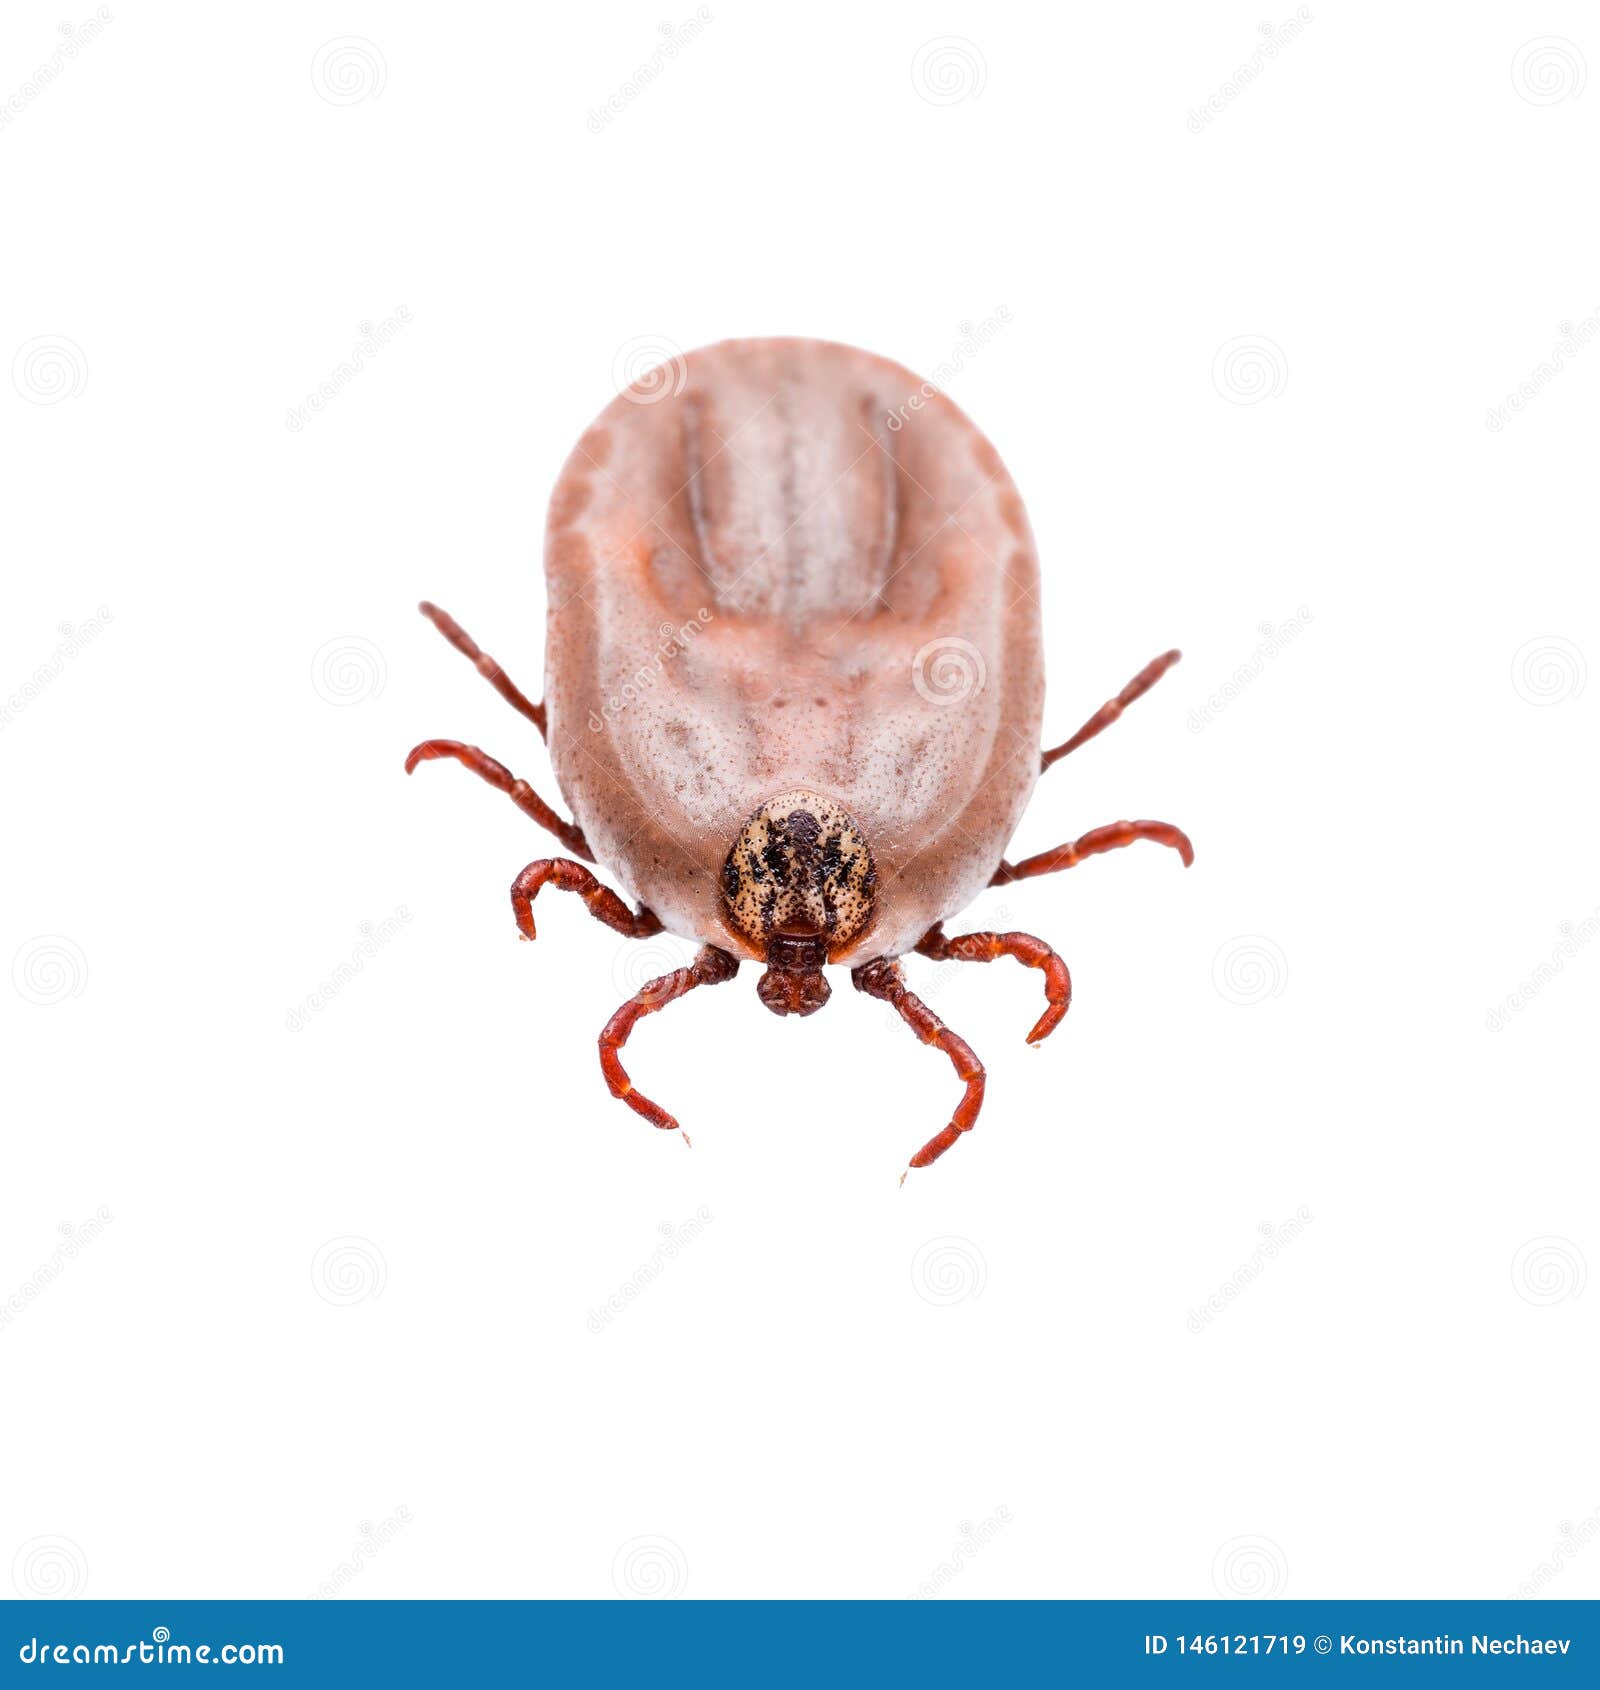 encephalitis virus or lyme disease infected tick arachnid insect  on white